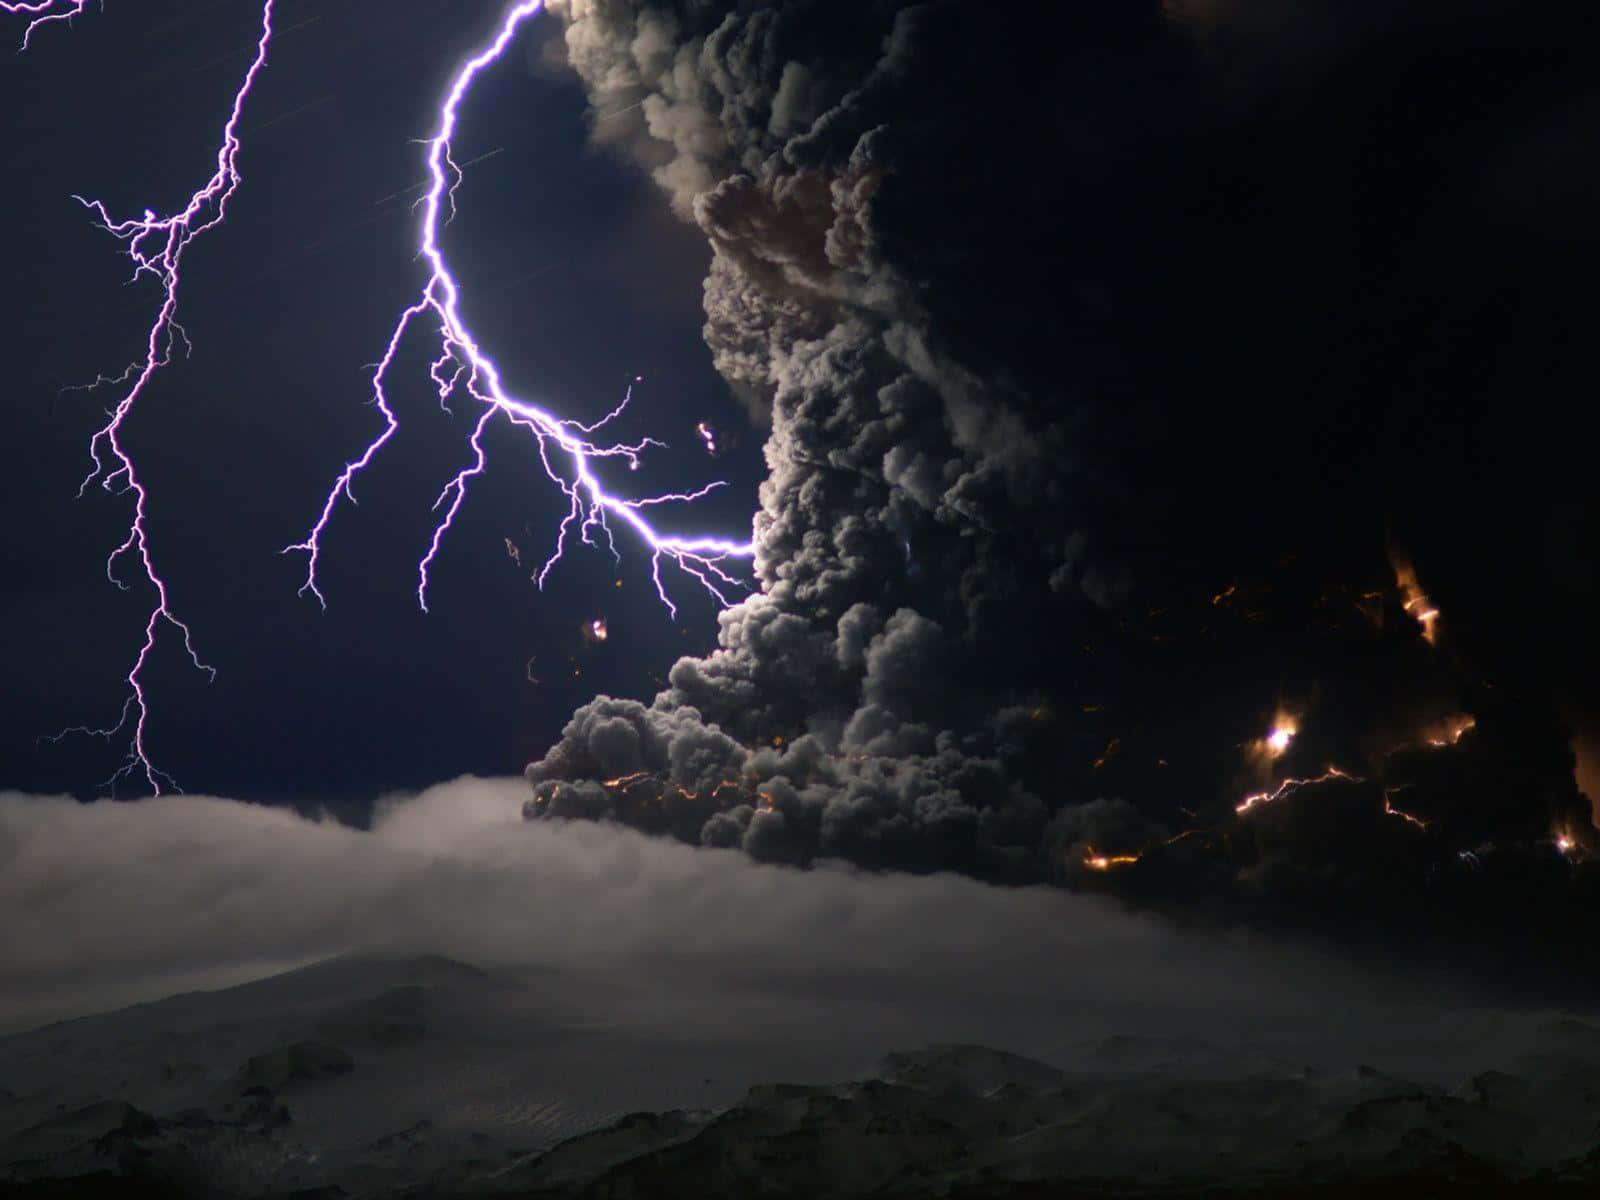 Powerful Thunderstorm Sky with Lightning Strikes